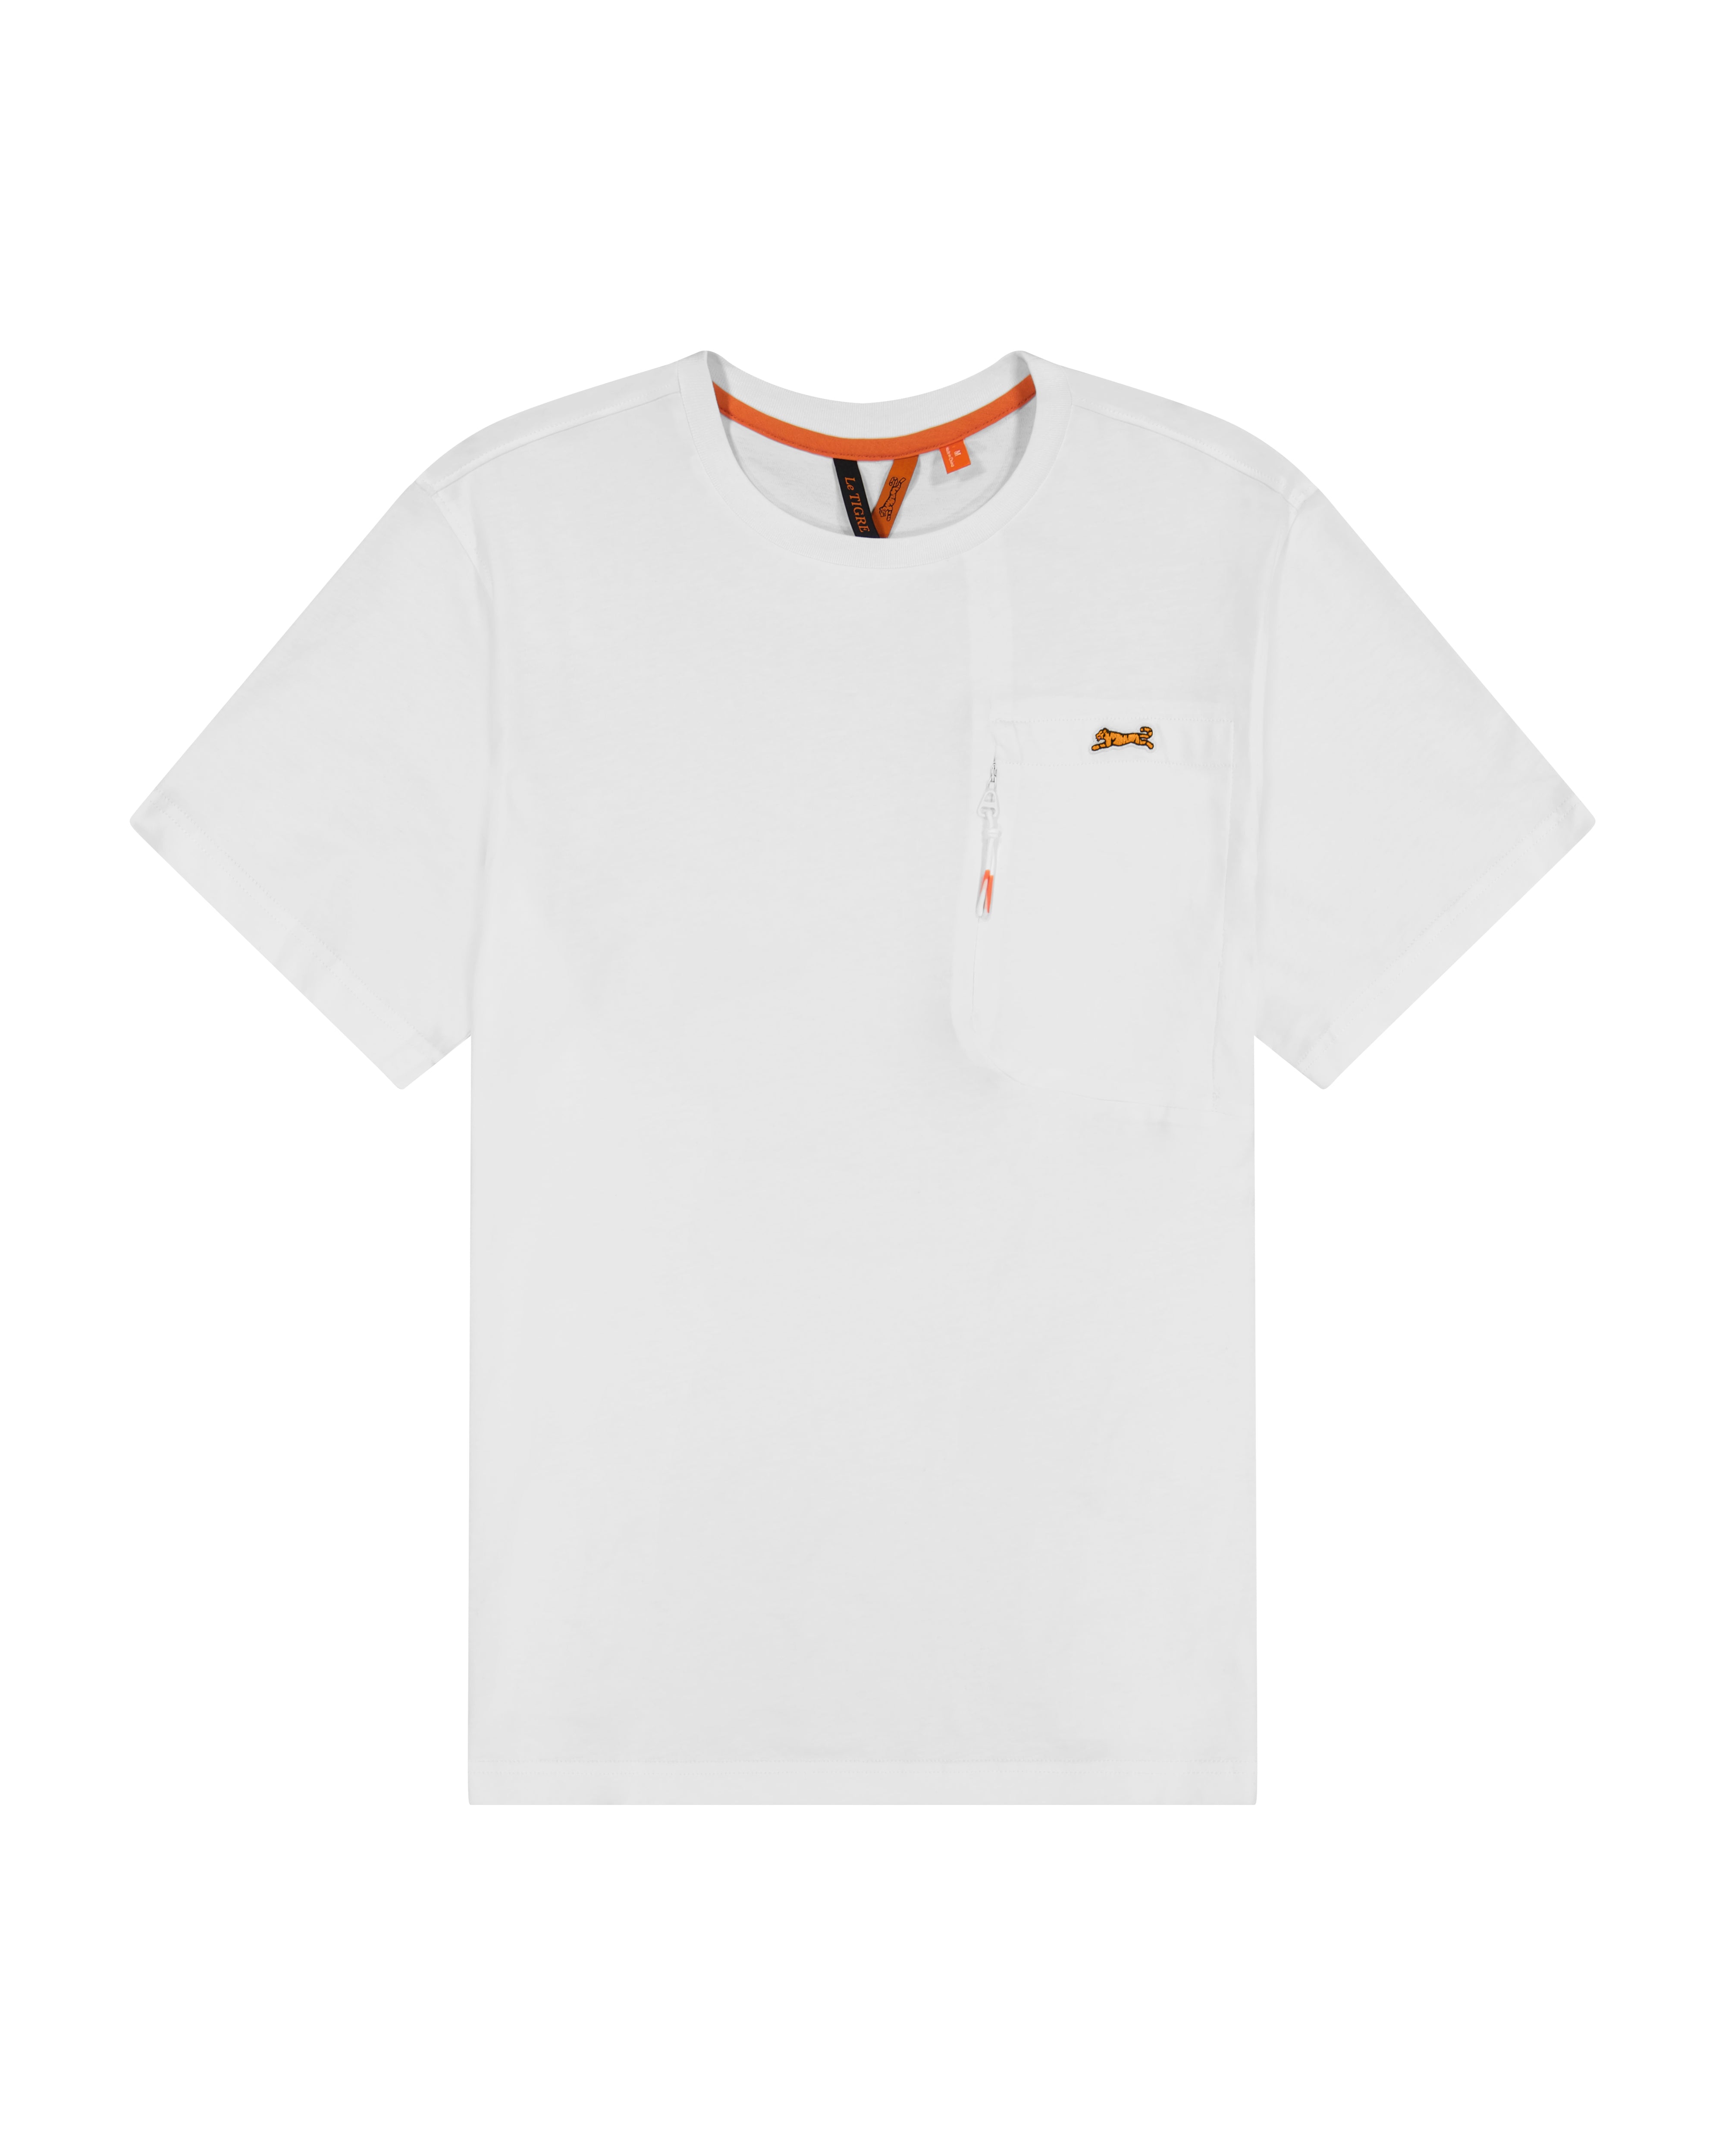 Vintage Men's T-Shirt - White - L